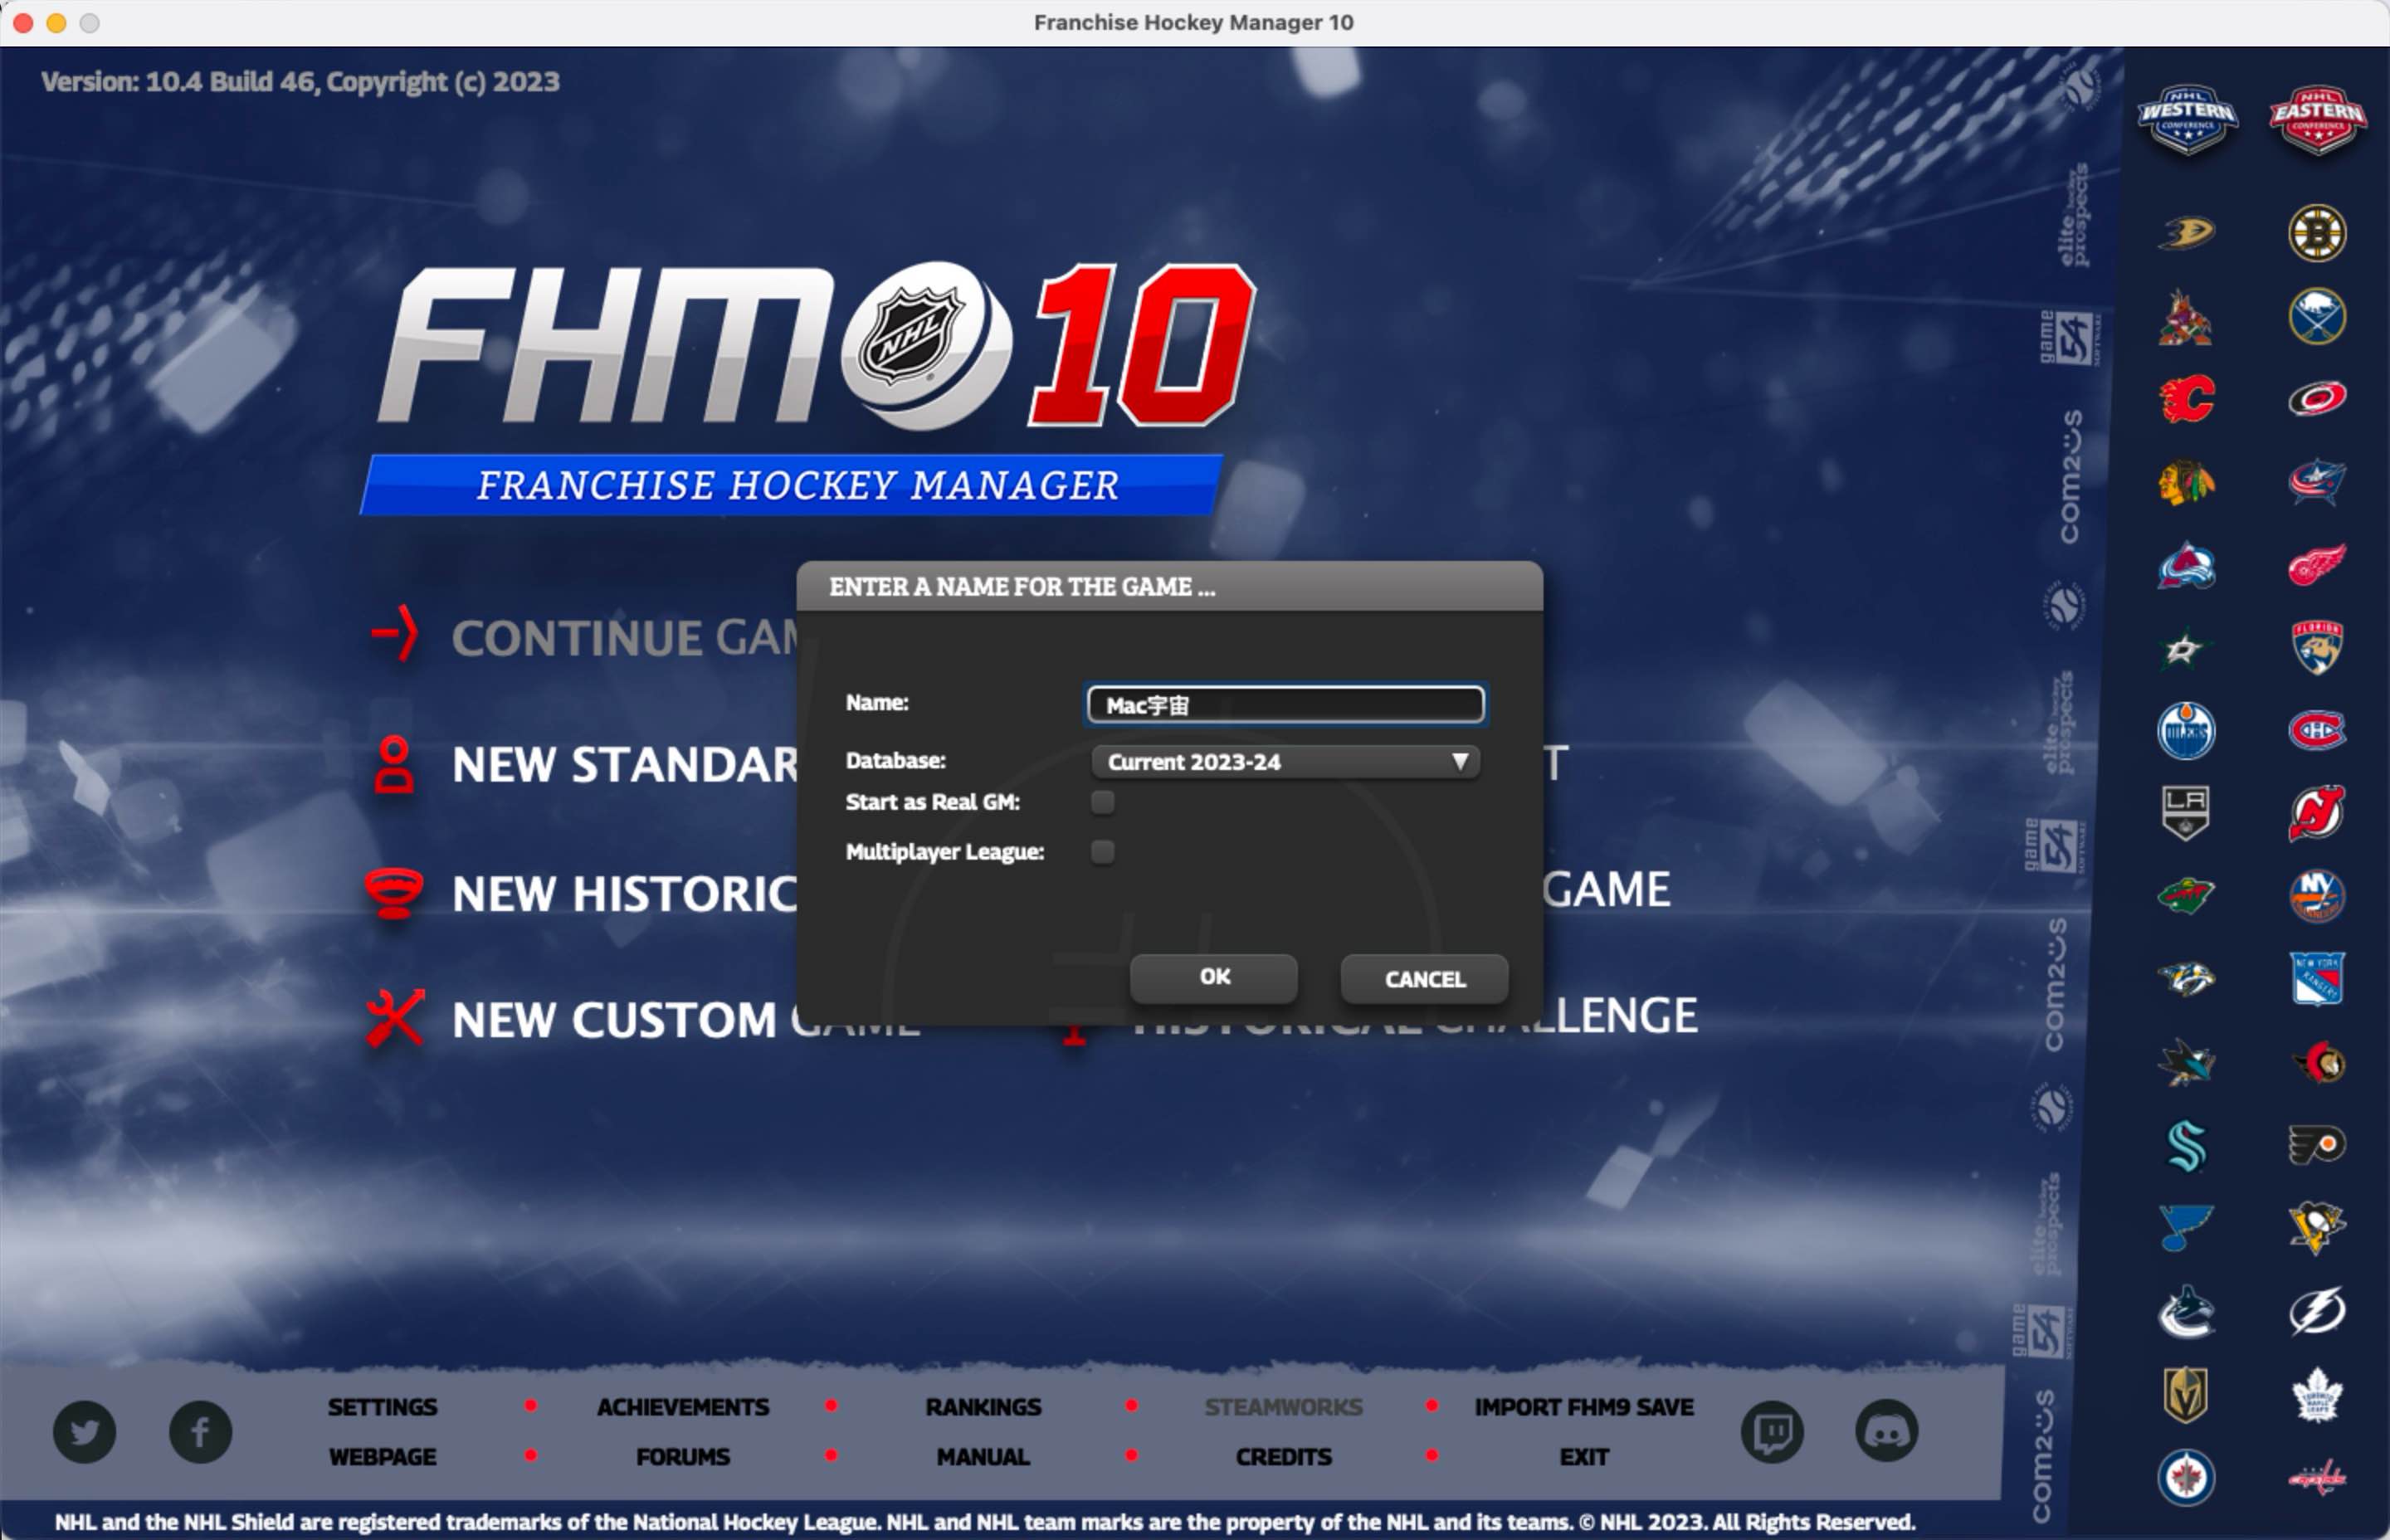 特许经营曲棍球经理10 for Mac Franchise Hockey Manager 10 v10.4.46 英文原生版 苹果电脑